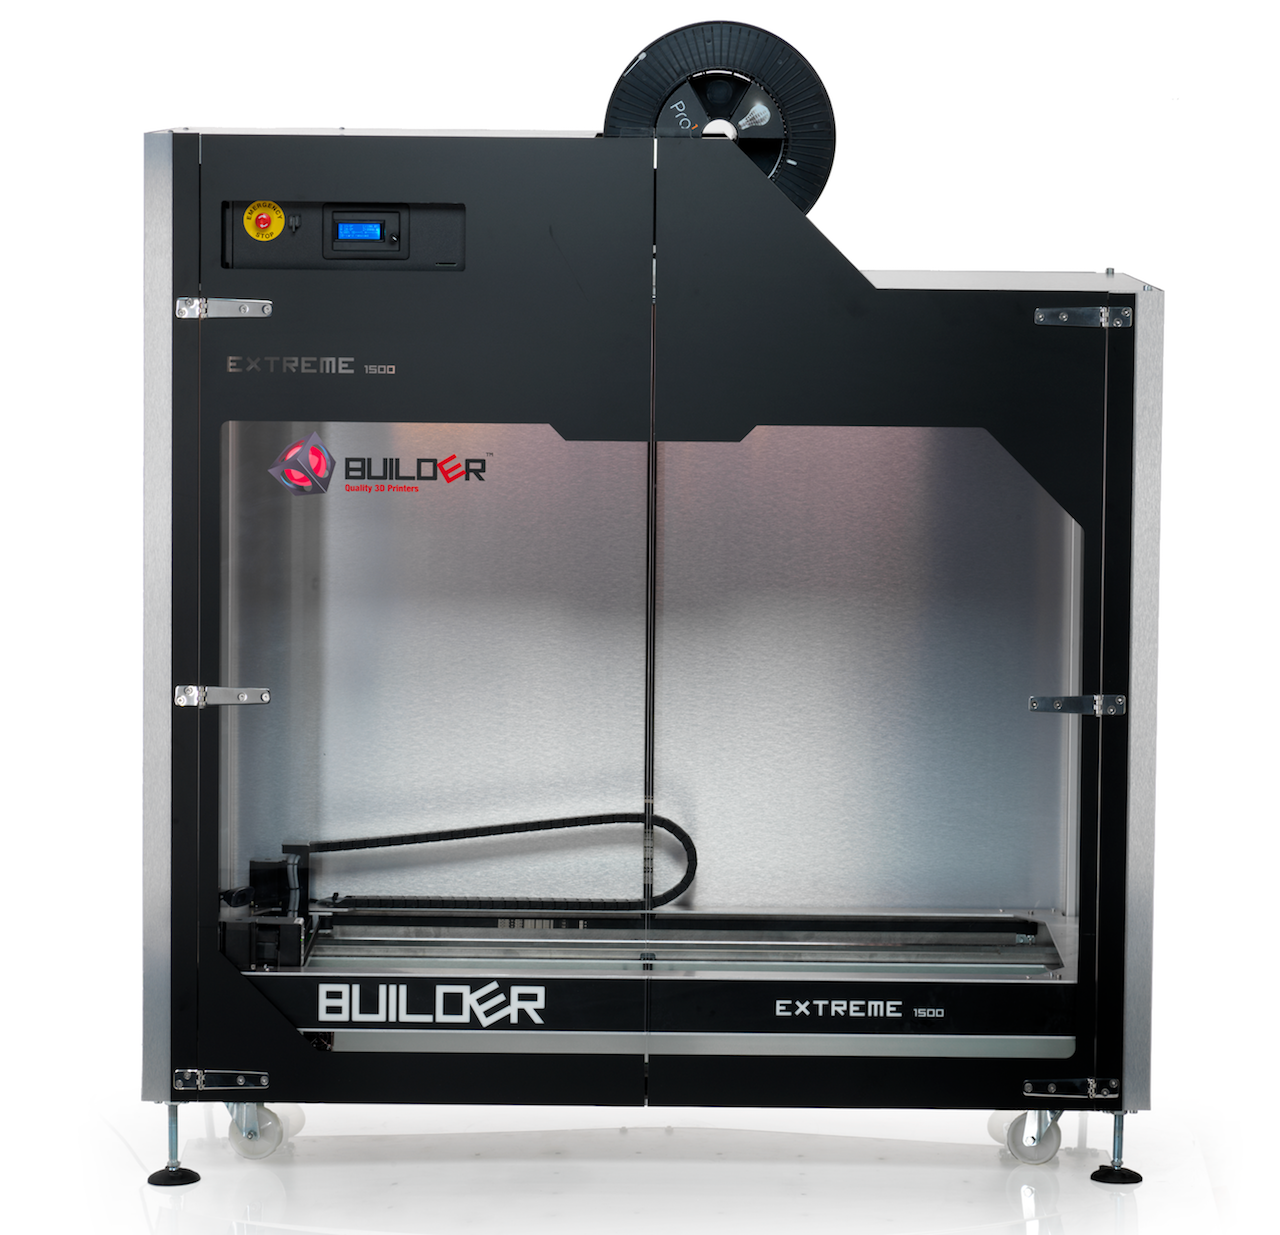  The Builder Extreme 1500 large-format 3D printer 